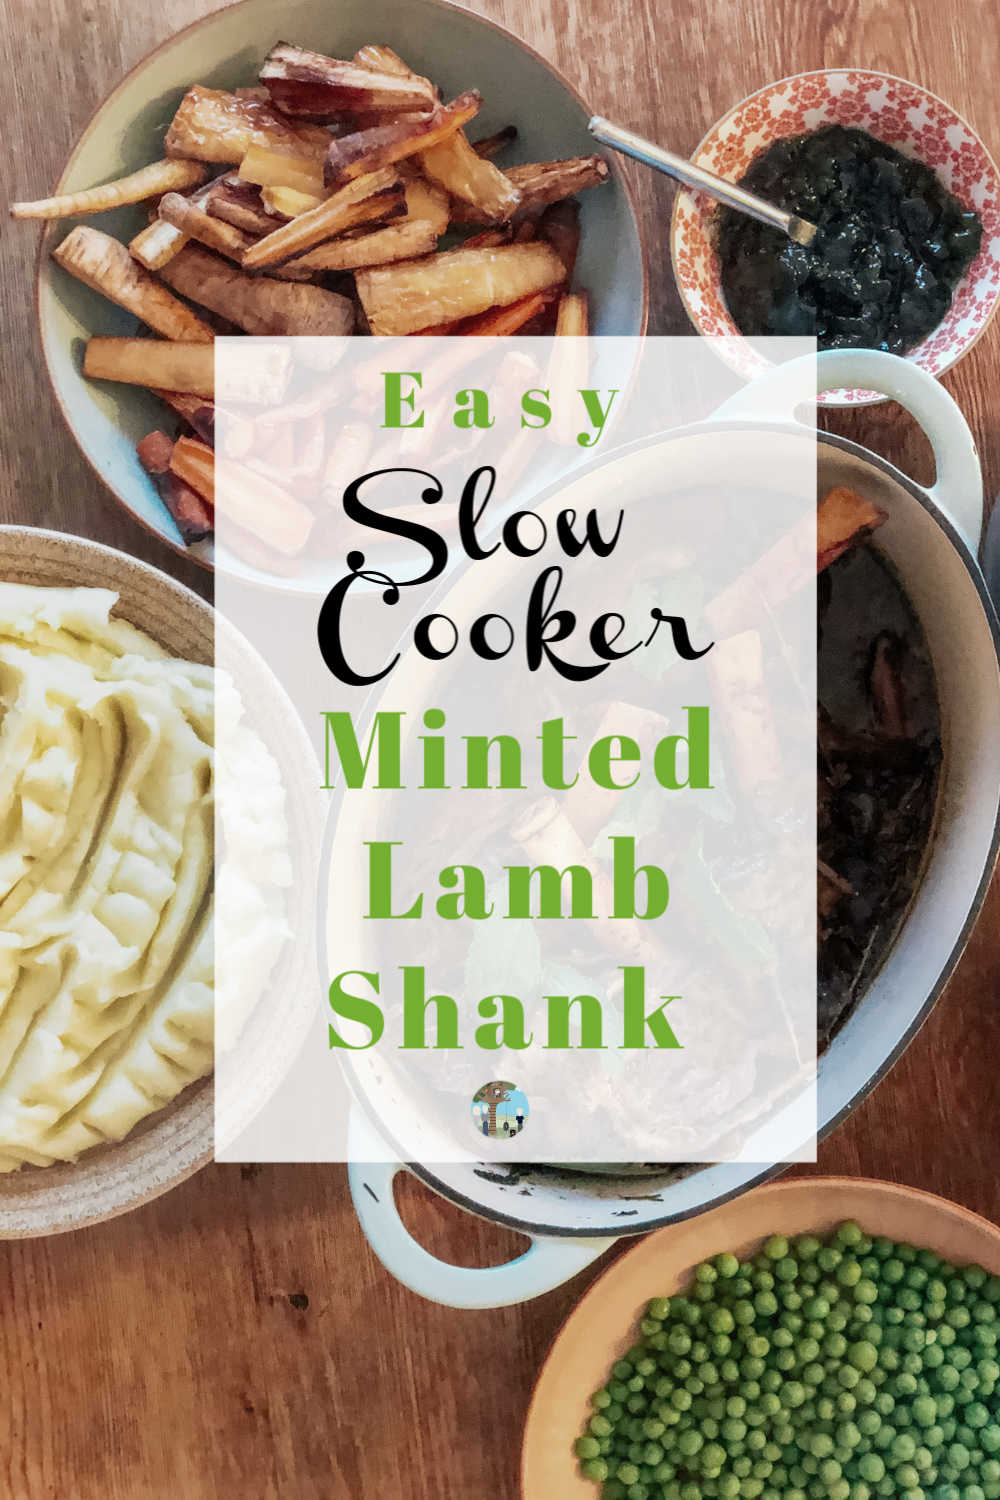 Slow Cooker Lamb Shank Recipe need easy midweek family meal idea.